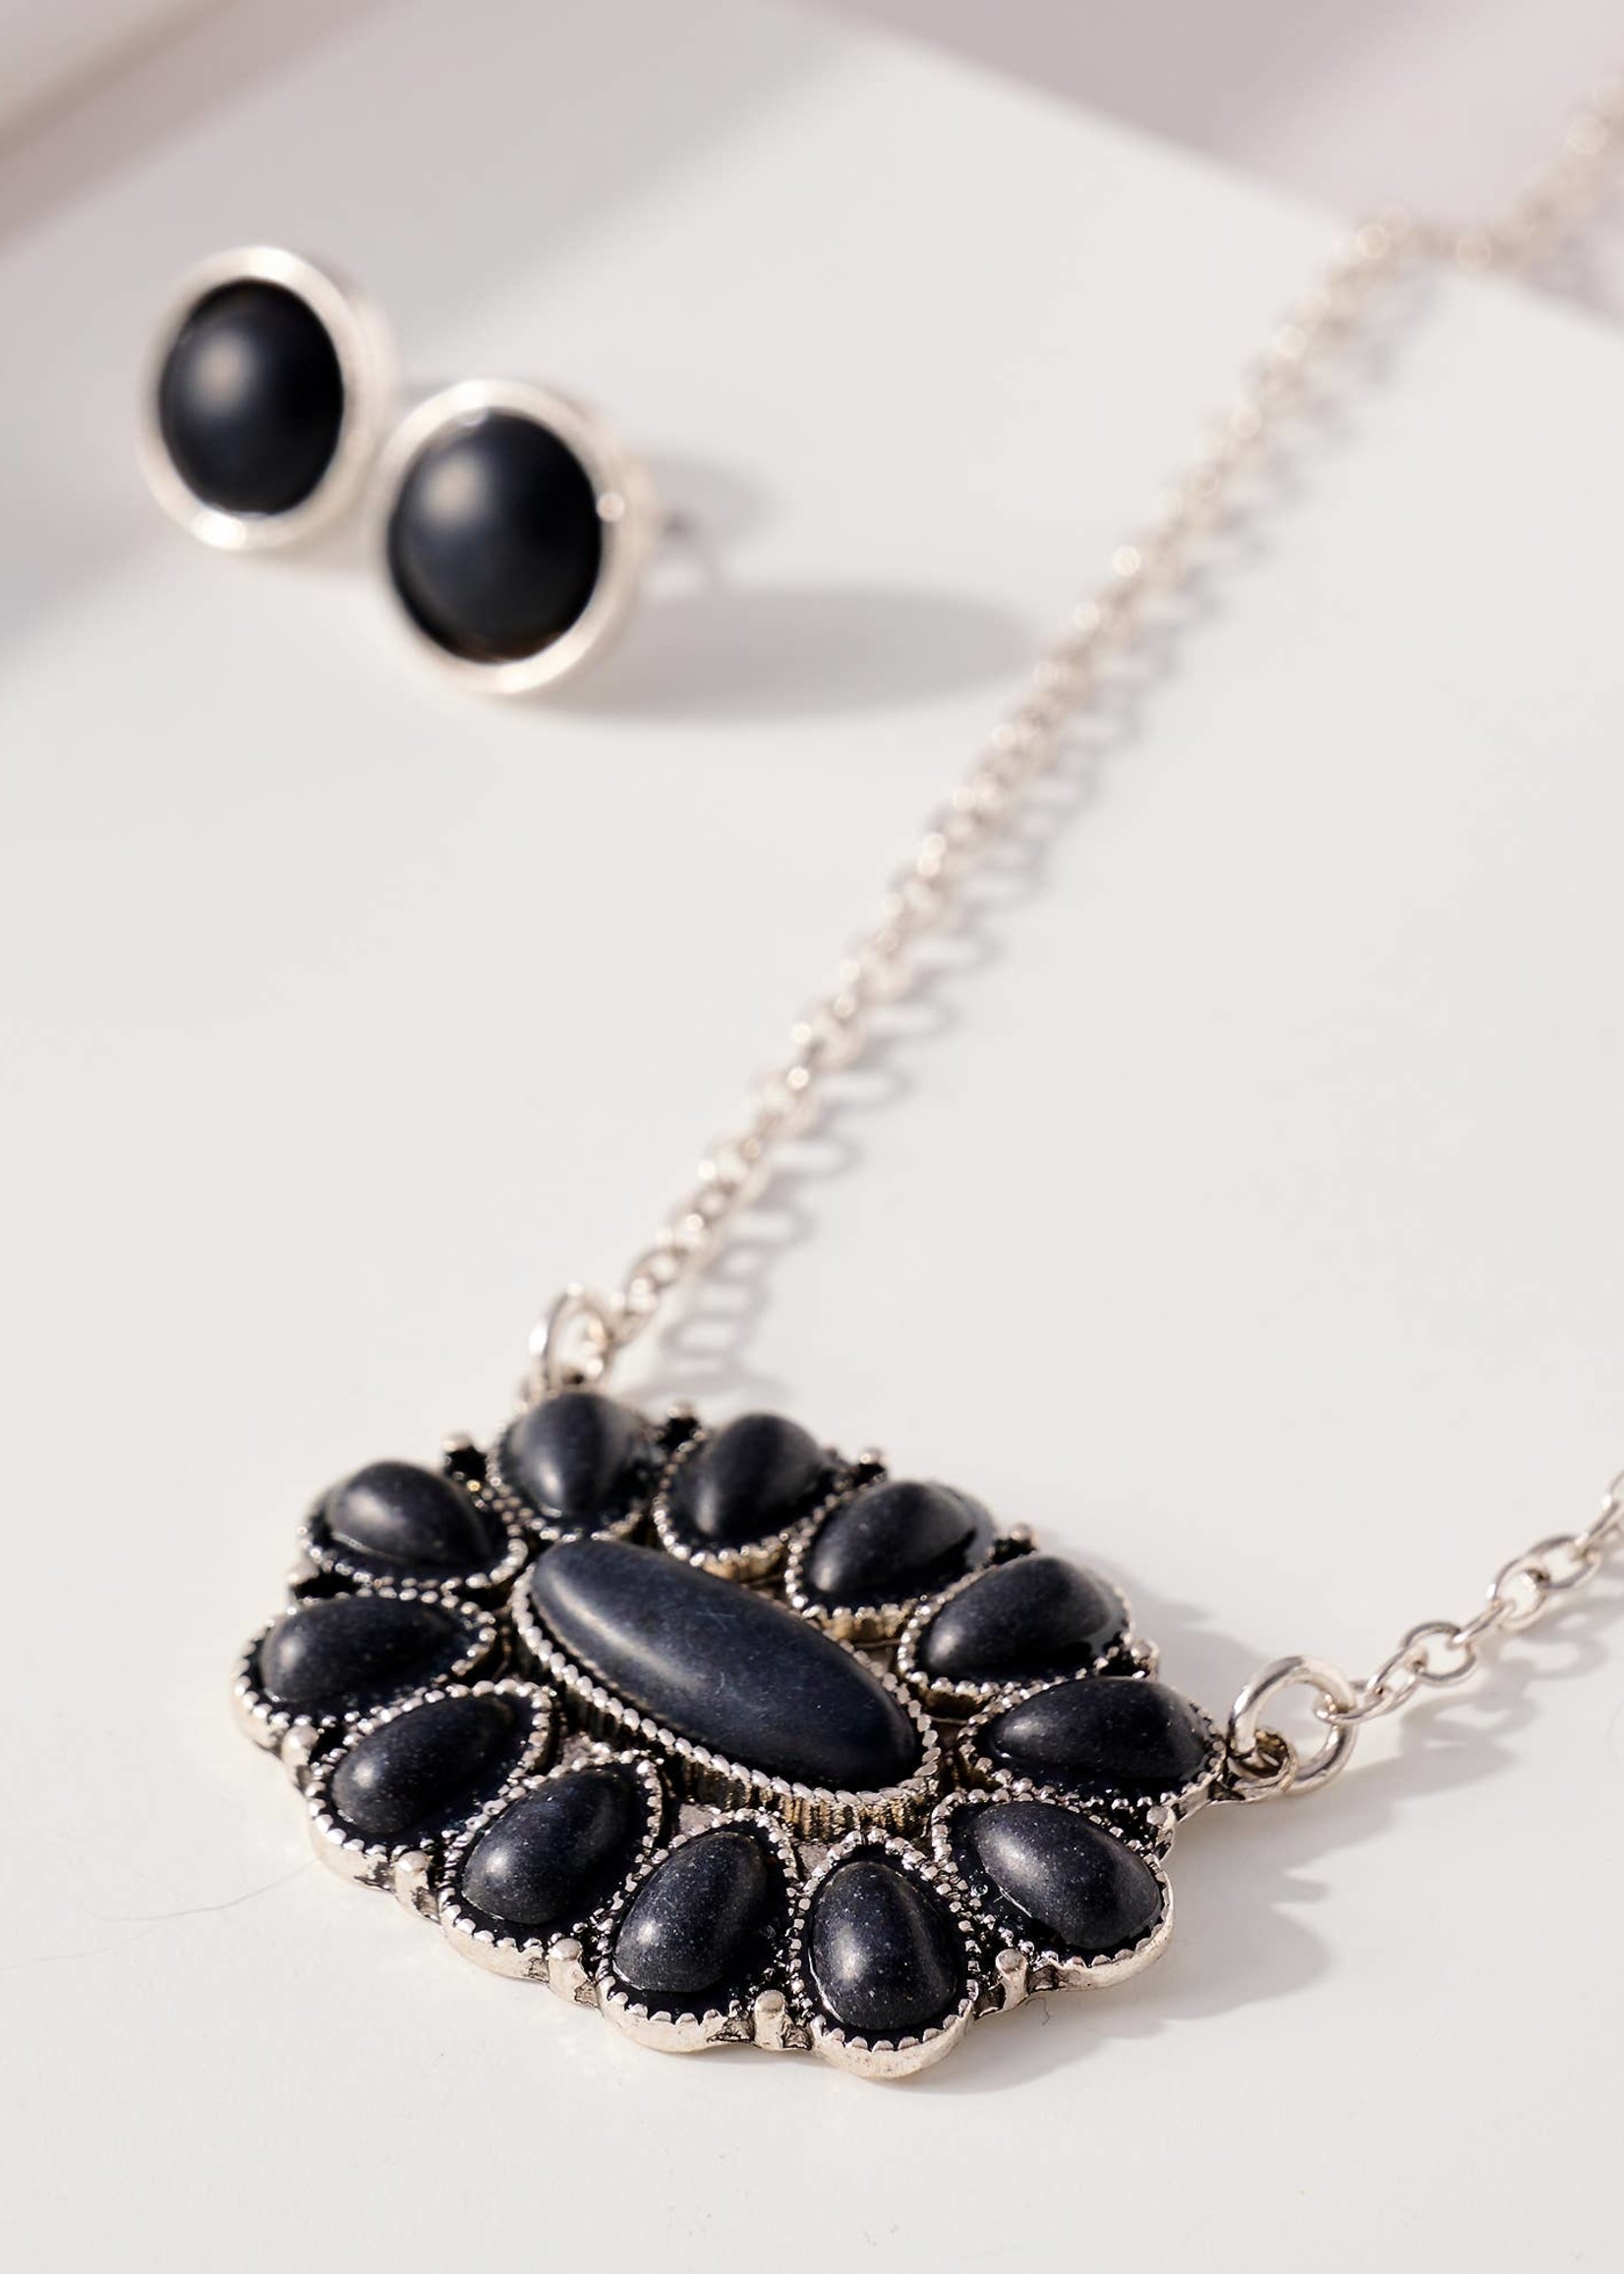 Western Stone Pendant Necklace - Black